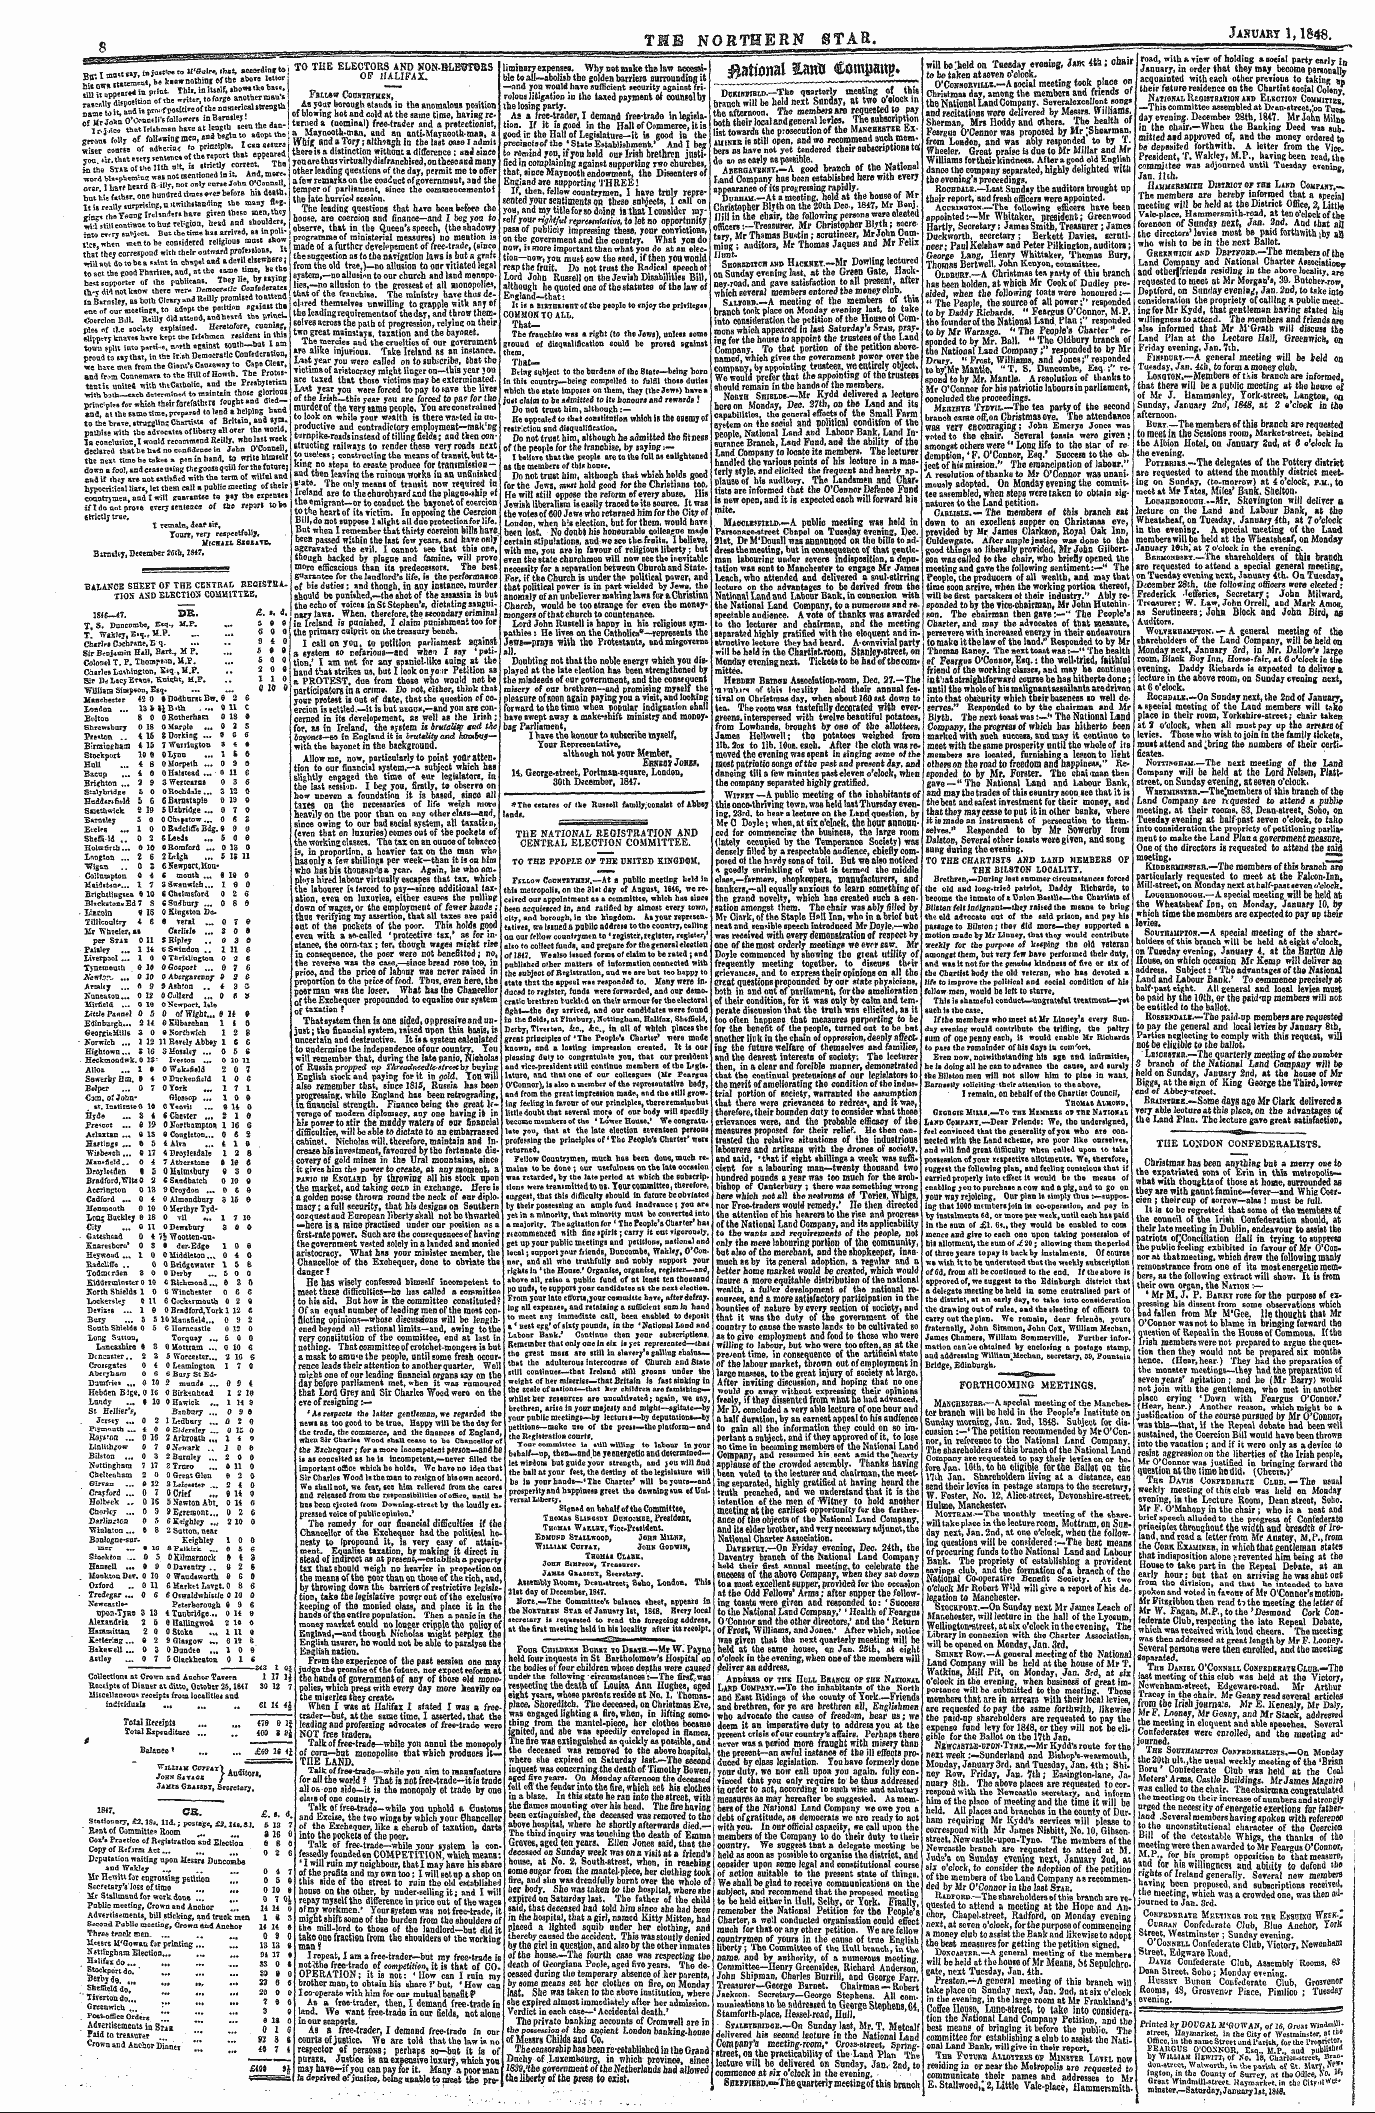 Northern Star (1837-1852): jS F Y, 3rd edition - Four Chimmsk Burst To Dbmh.—Mr W. Payne ...